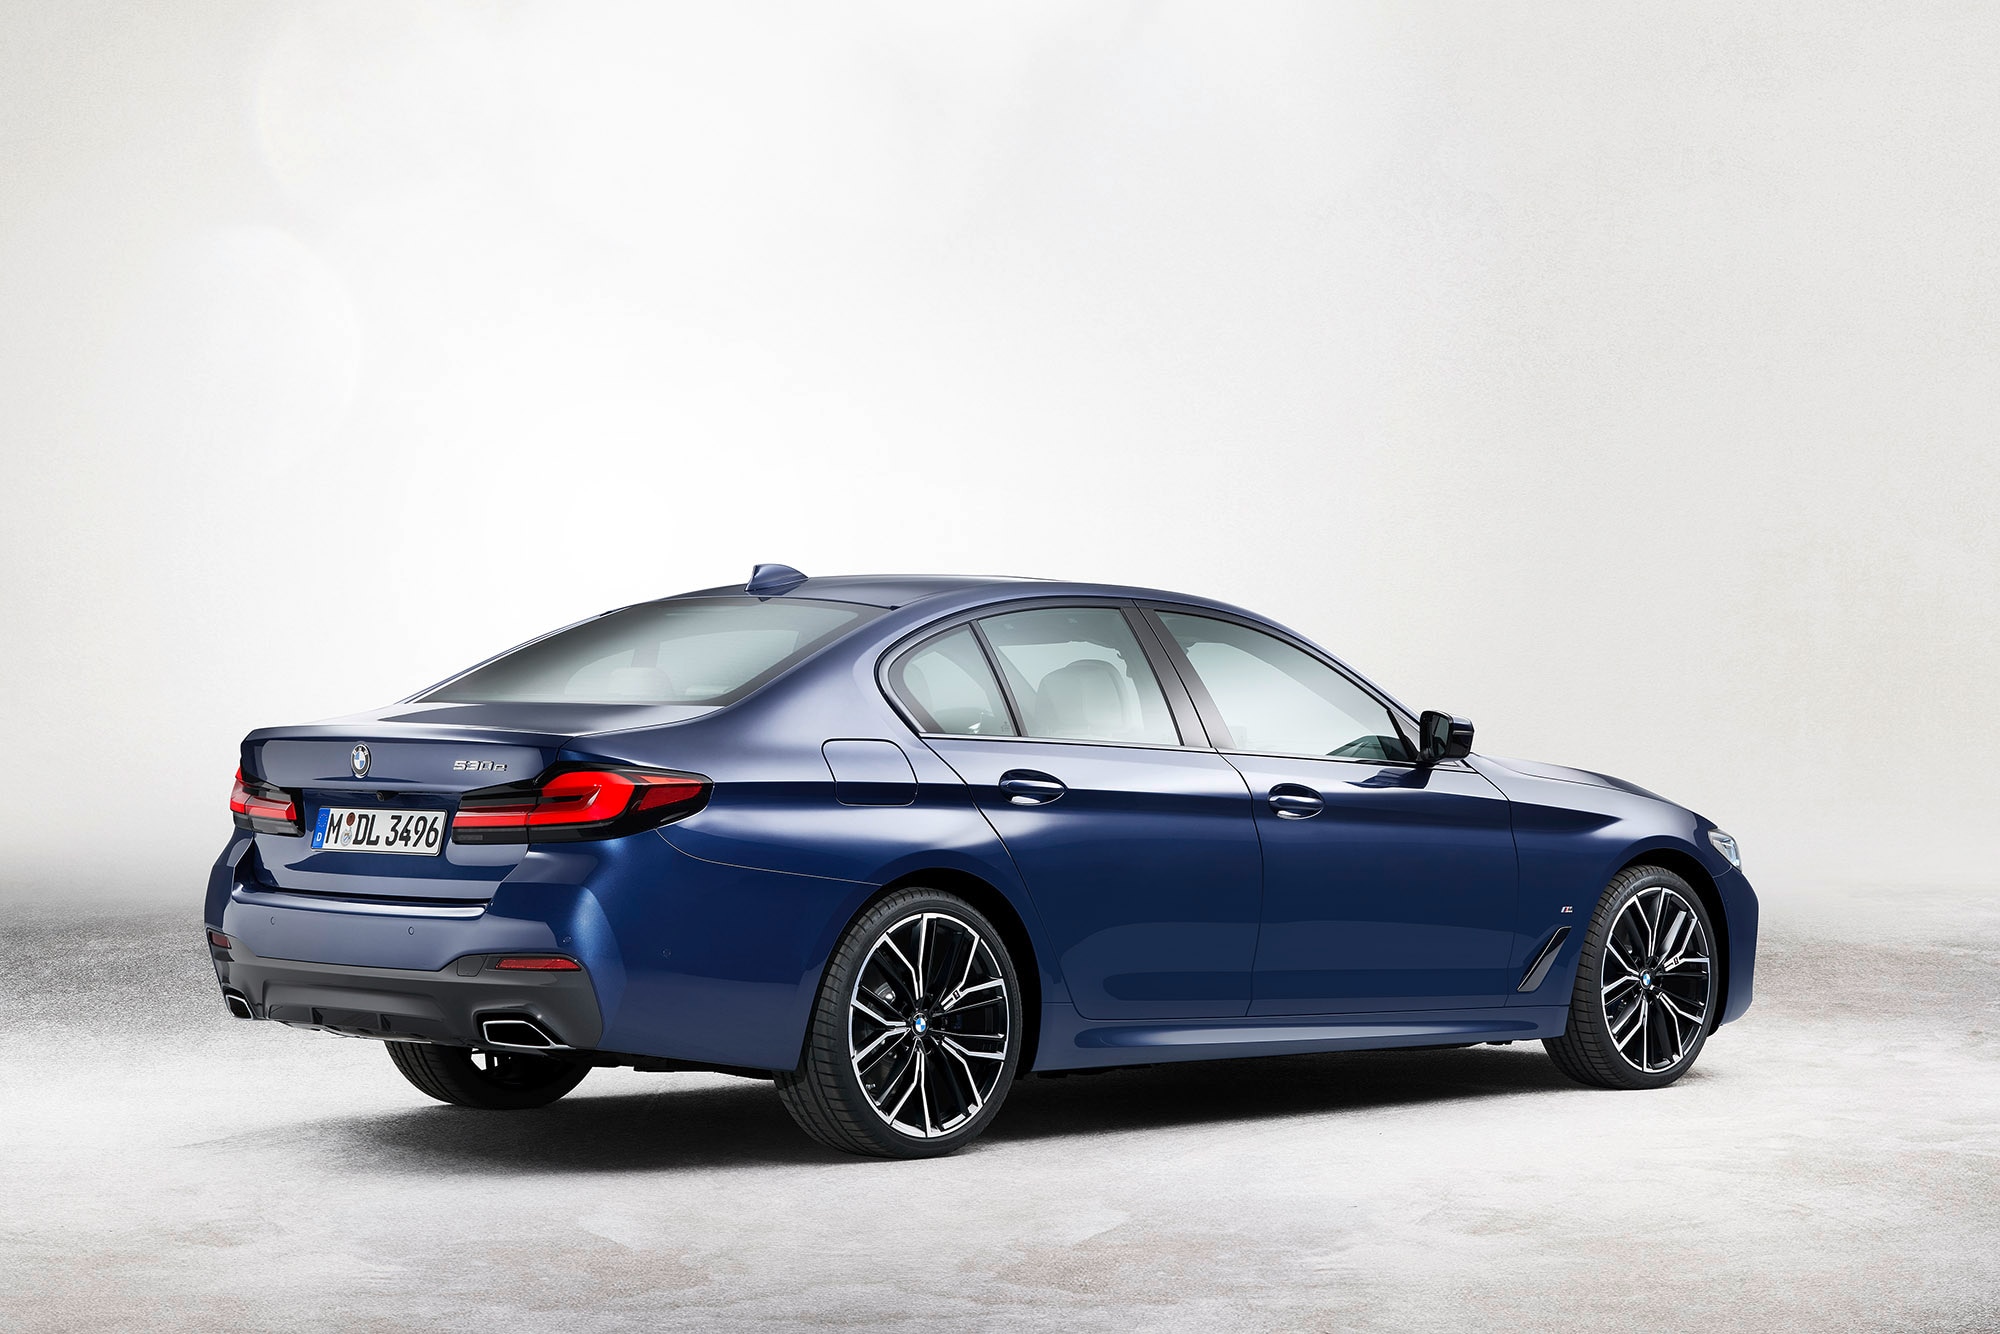 BMW 5 Series in blue, rear